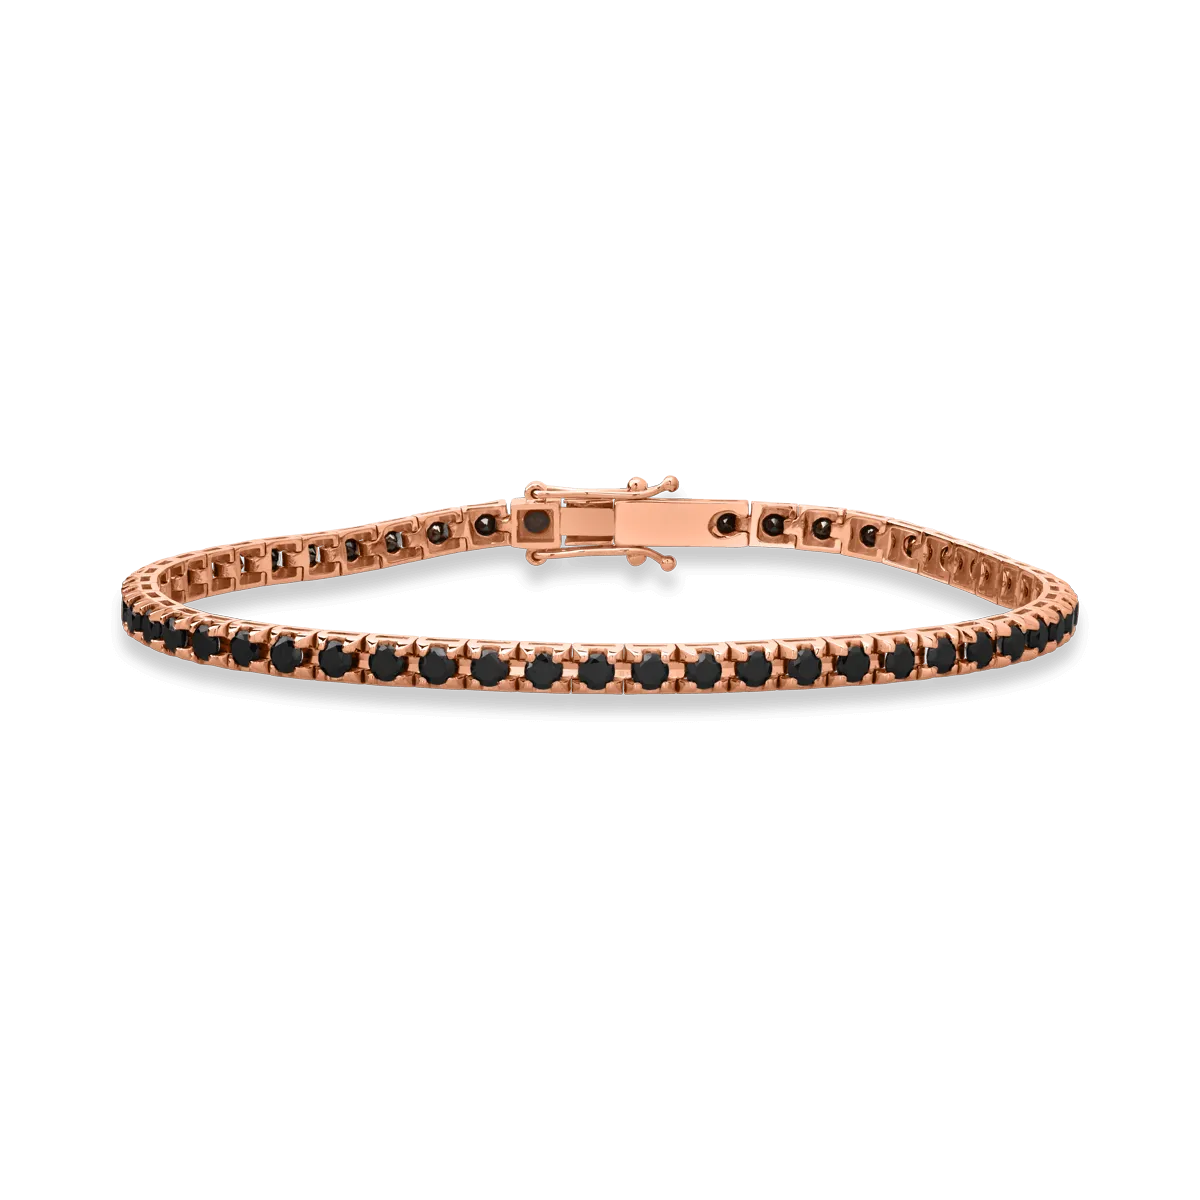 18K rose gold tennis bracelet with 1.65ct black diamonds